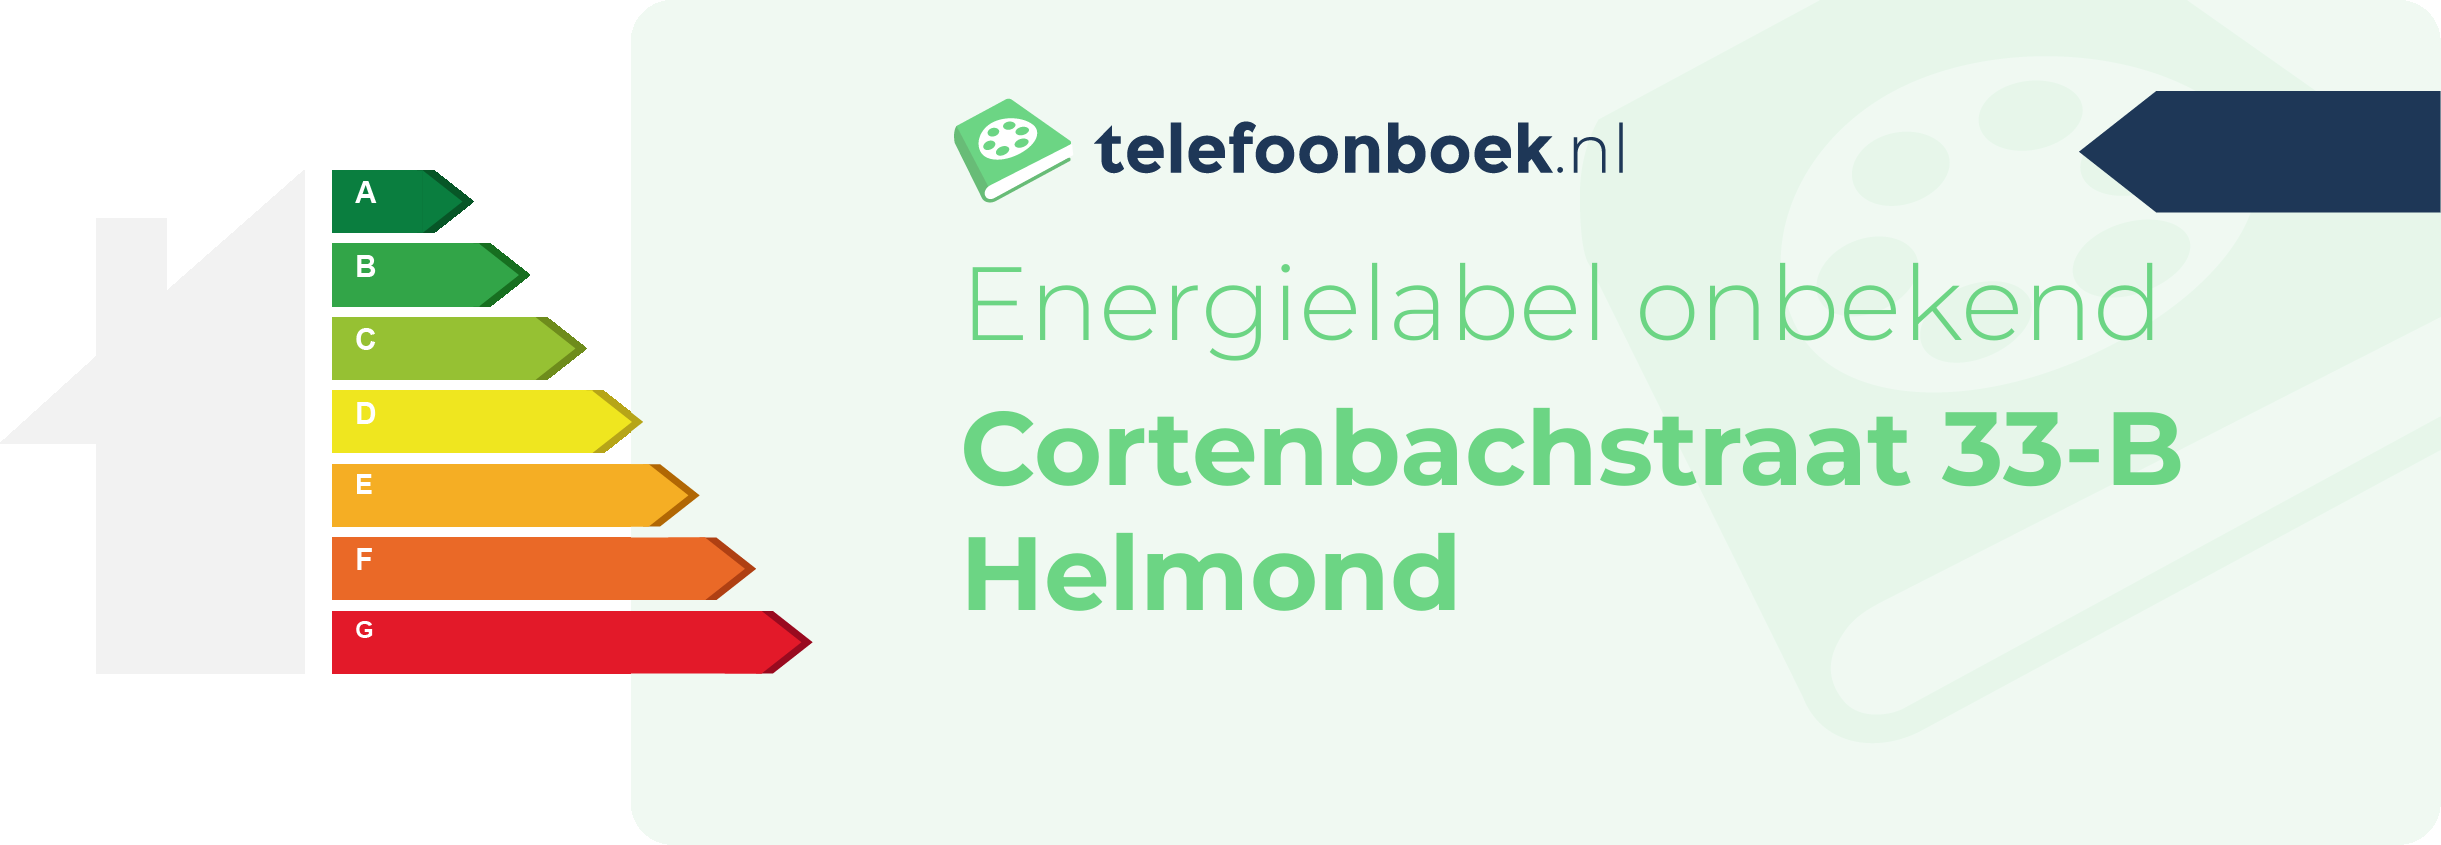 Energielabel Cortenbachstraat 33-B Helmond